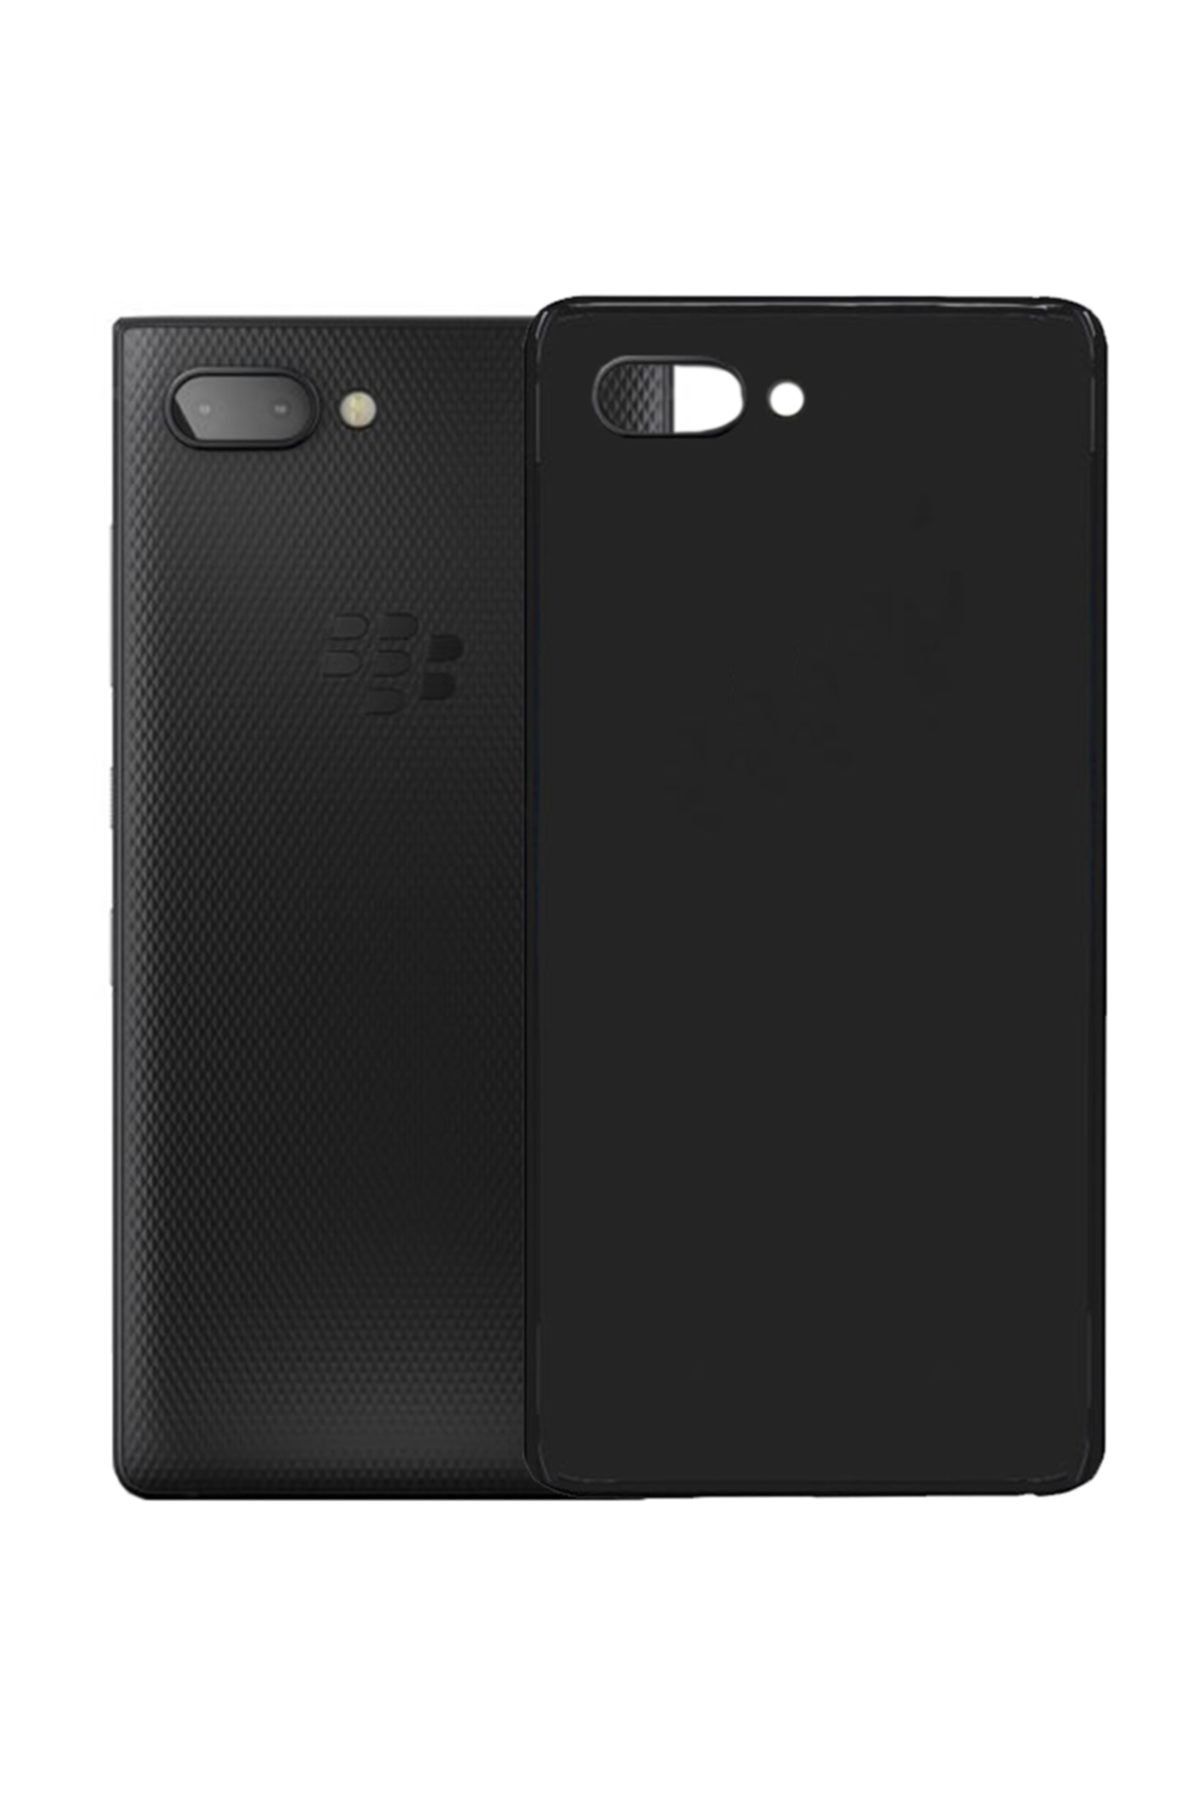 Microcase Blackberry Key2 Pudding Tpu Serisi Silikon Kılıf - Siyah